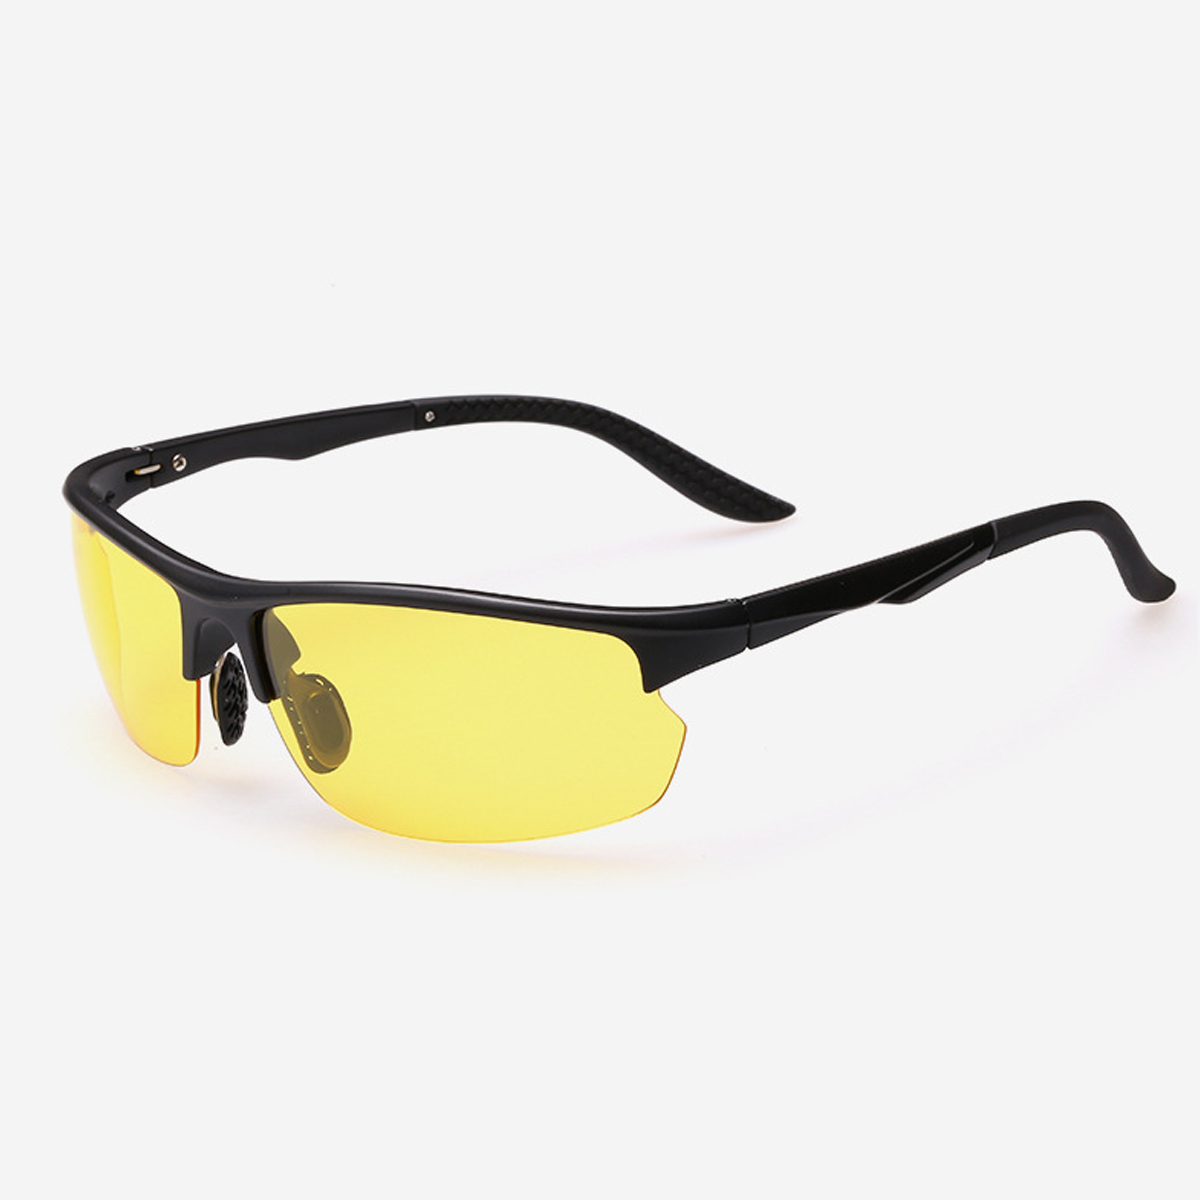 

Blioesy Sunglasses Mens Glasses Polarized Sun Glasses Sports